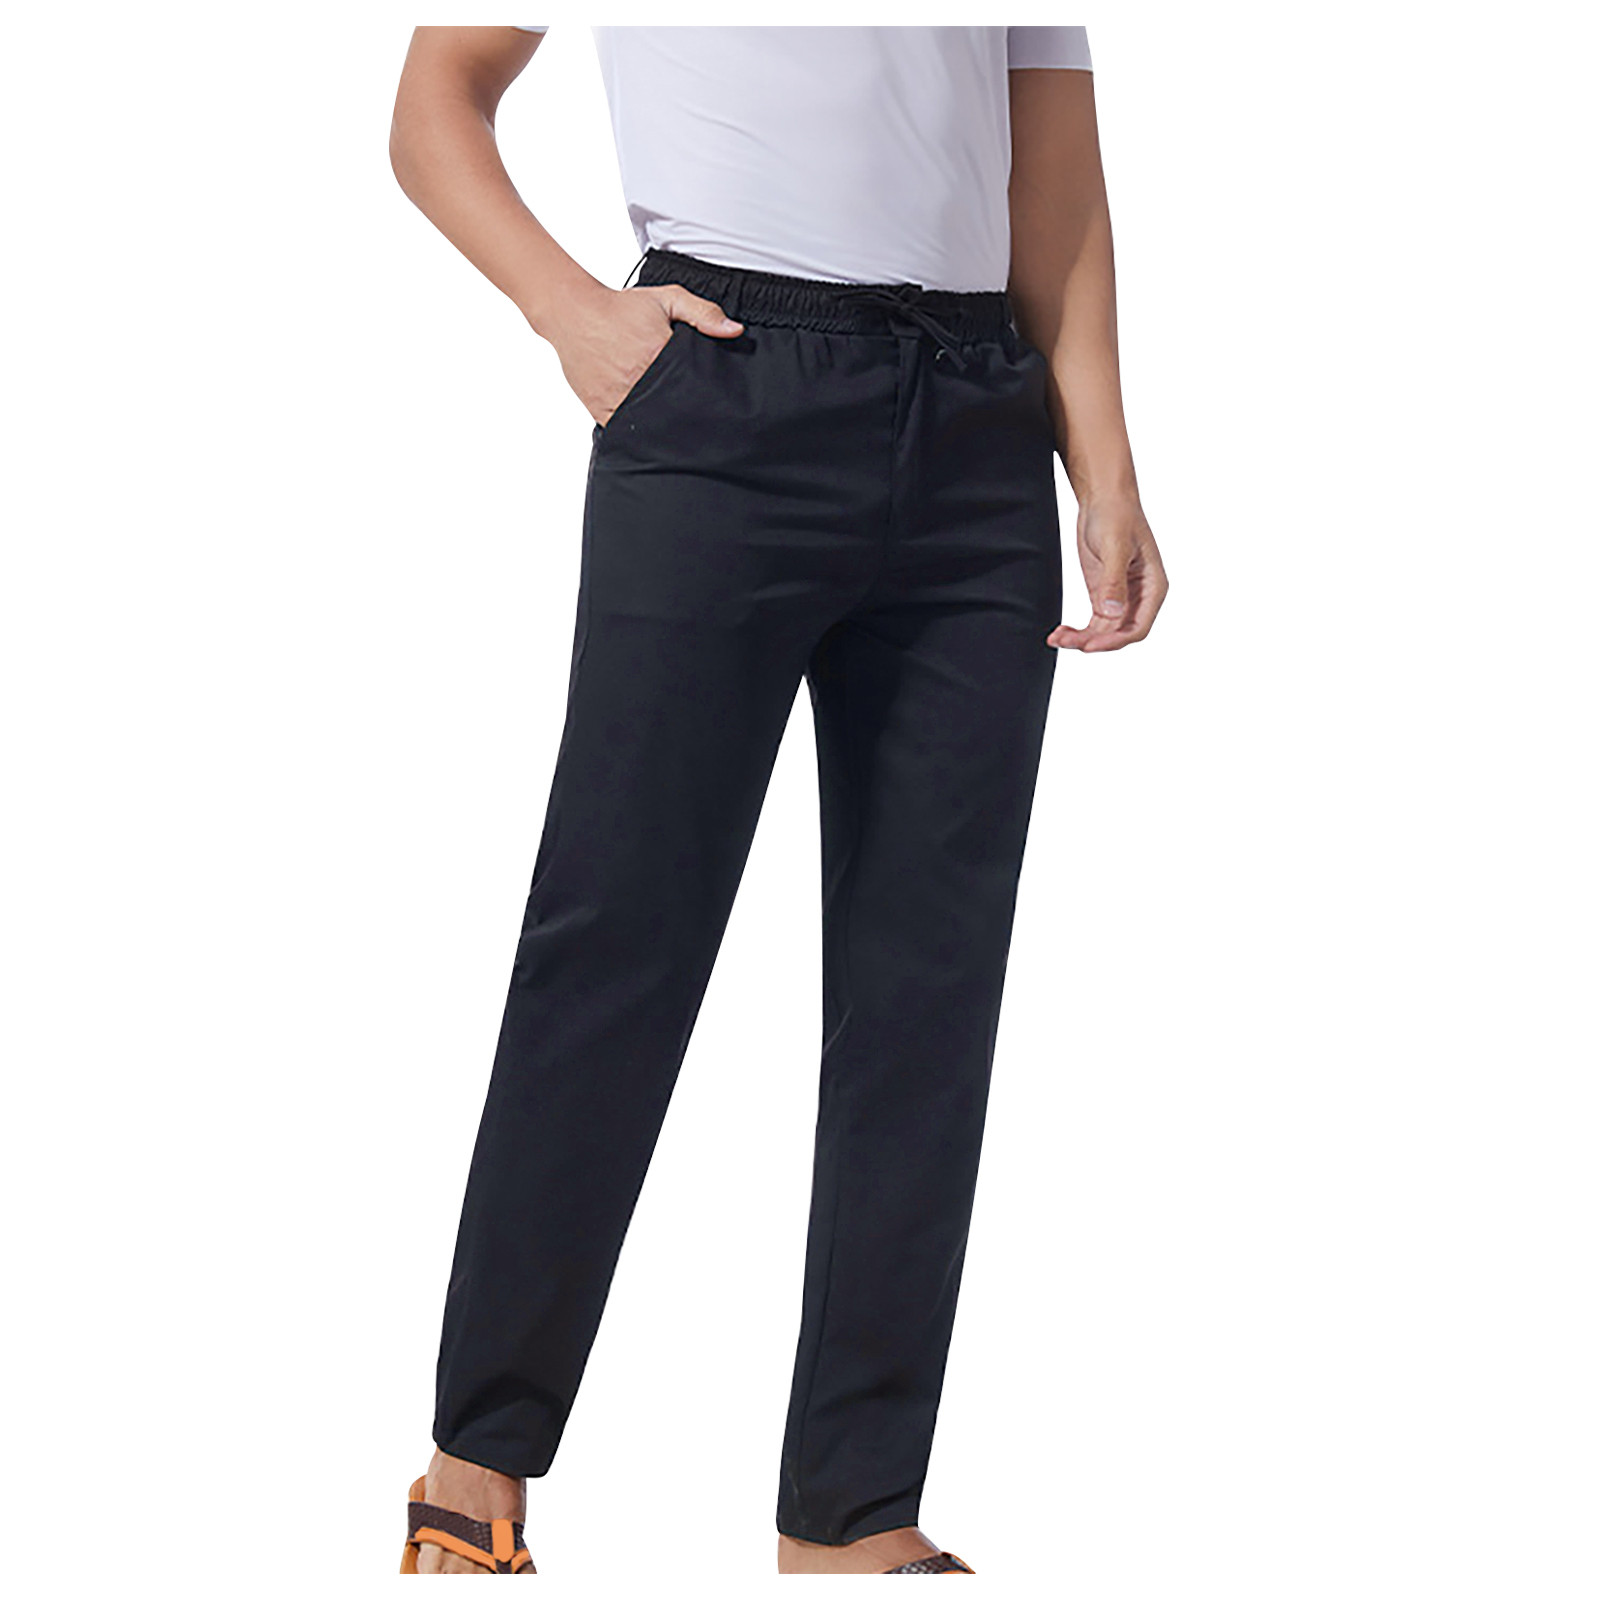 Tdoqot Chinos Pants Men- Drawstring Comftable Elastic Waist Slim Casual Cotton Mens Pants Black - image 2 of 6